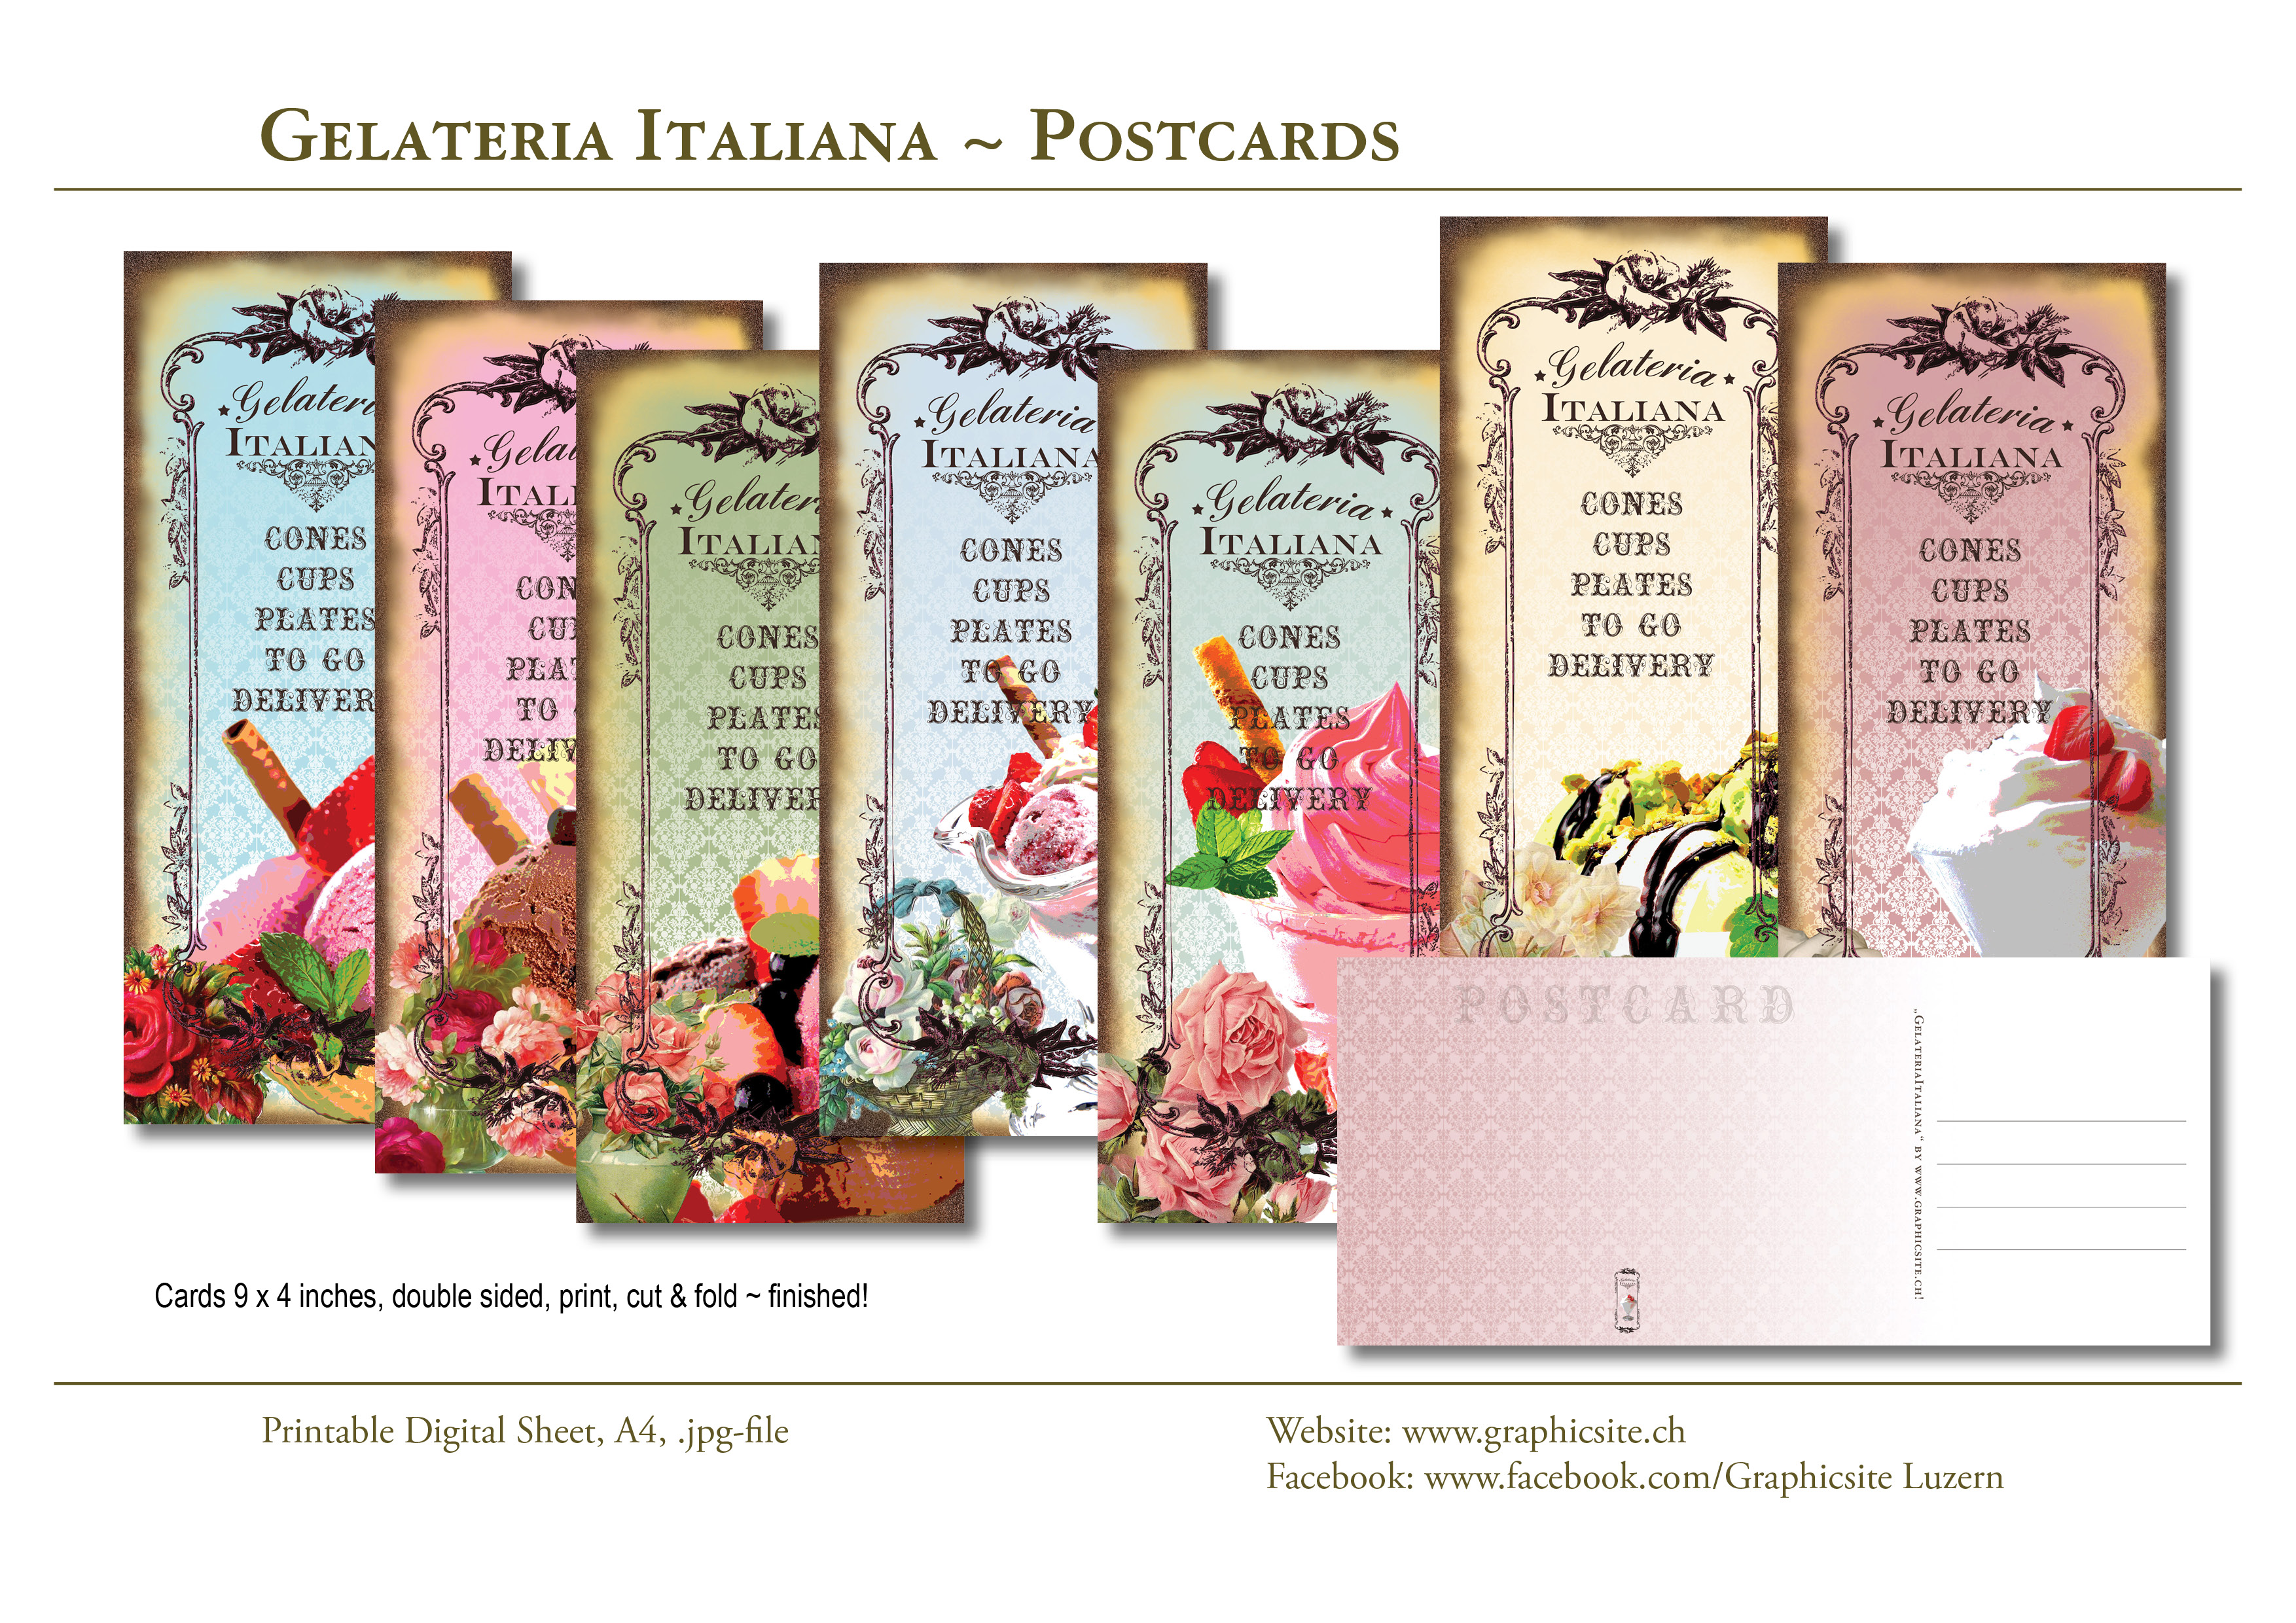 Karten selber drucken - Postkarten 9x4 Zoll - Gelateria Italiana, #Glacé, #Gelati, #Karten, #basteln, #Grusskarten,